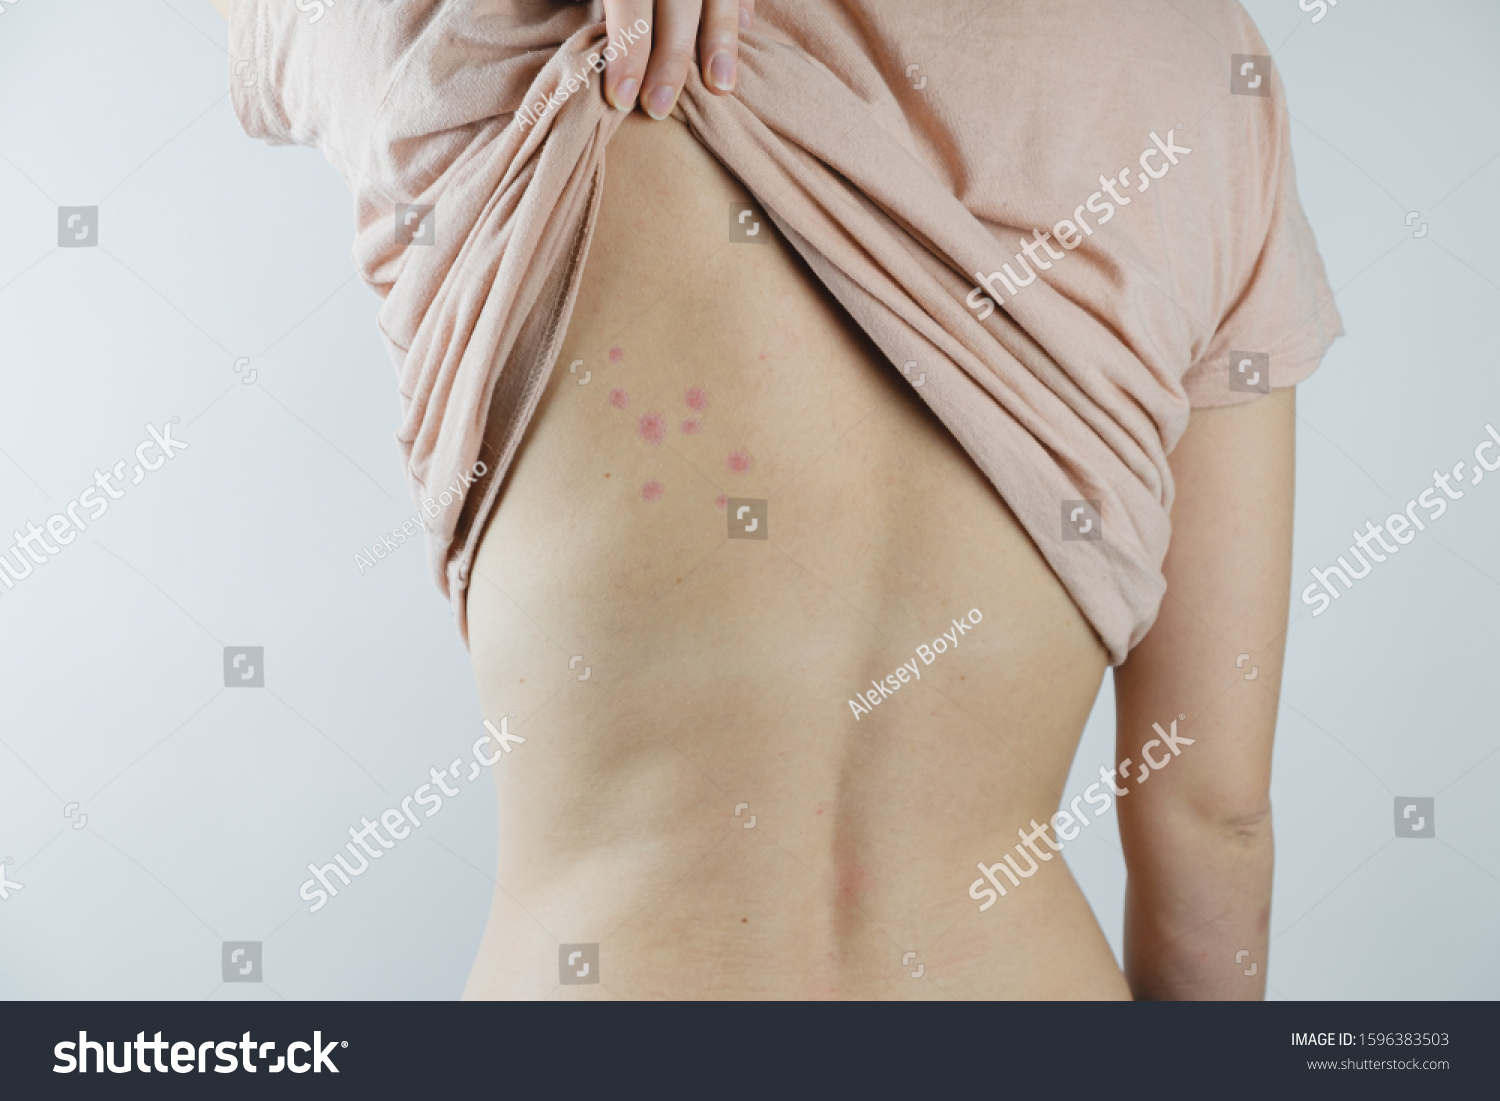 Damaged skin on female's back. Bedbug bites, moosquito bites or skin disease on human body #1596383503